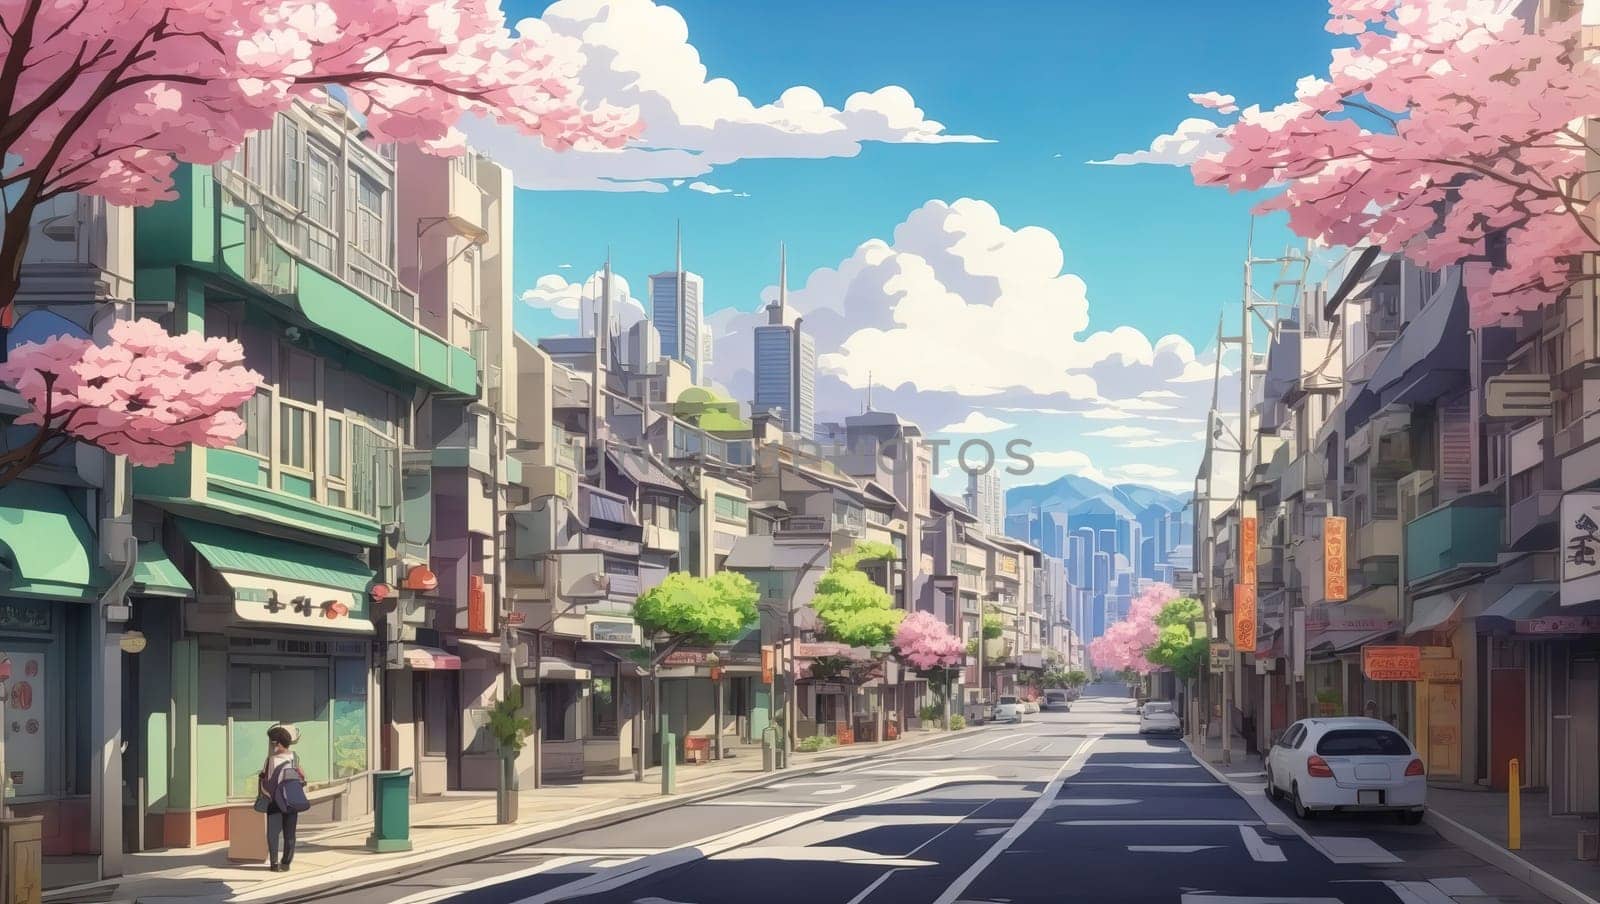 Beautiful city street anime style by applesstock